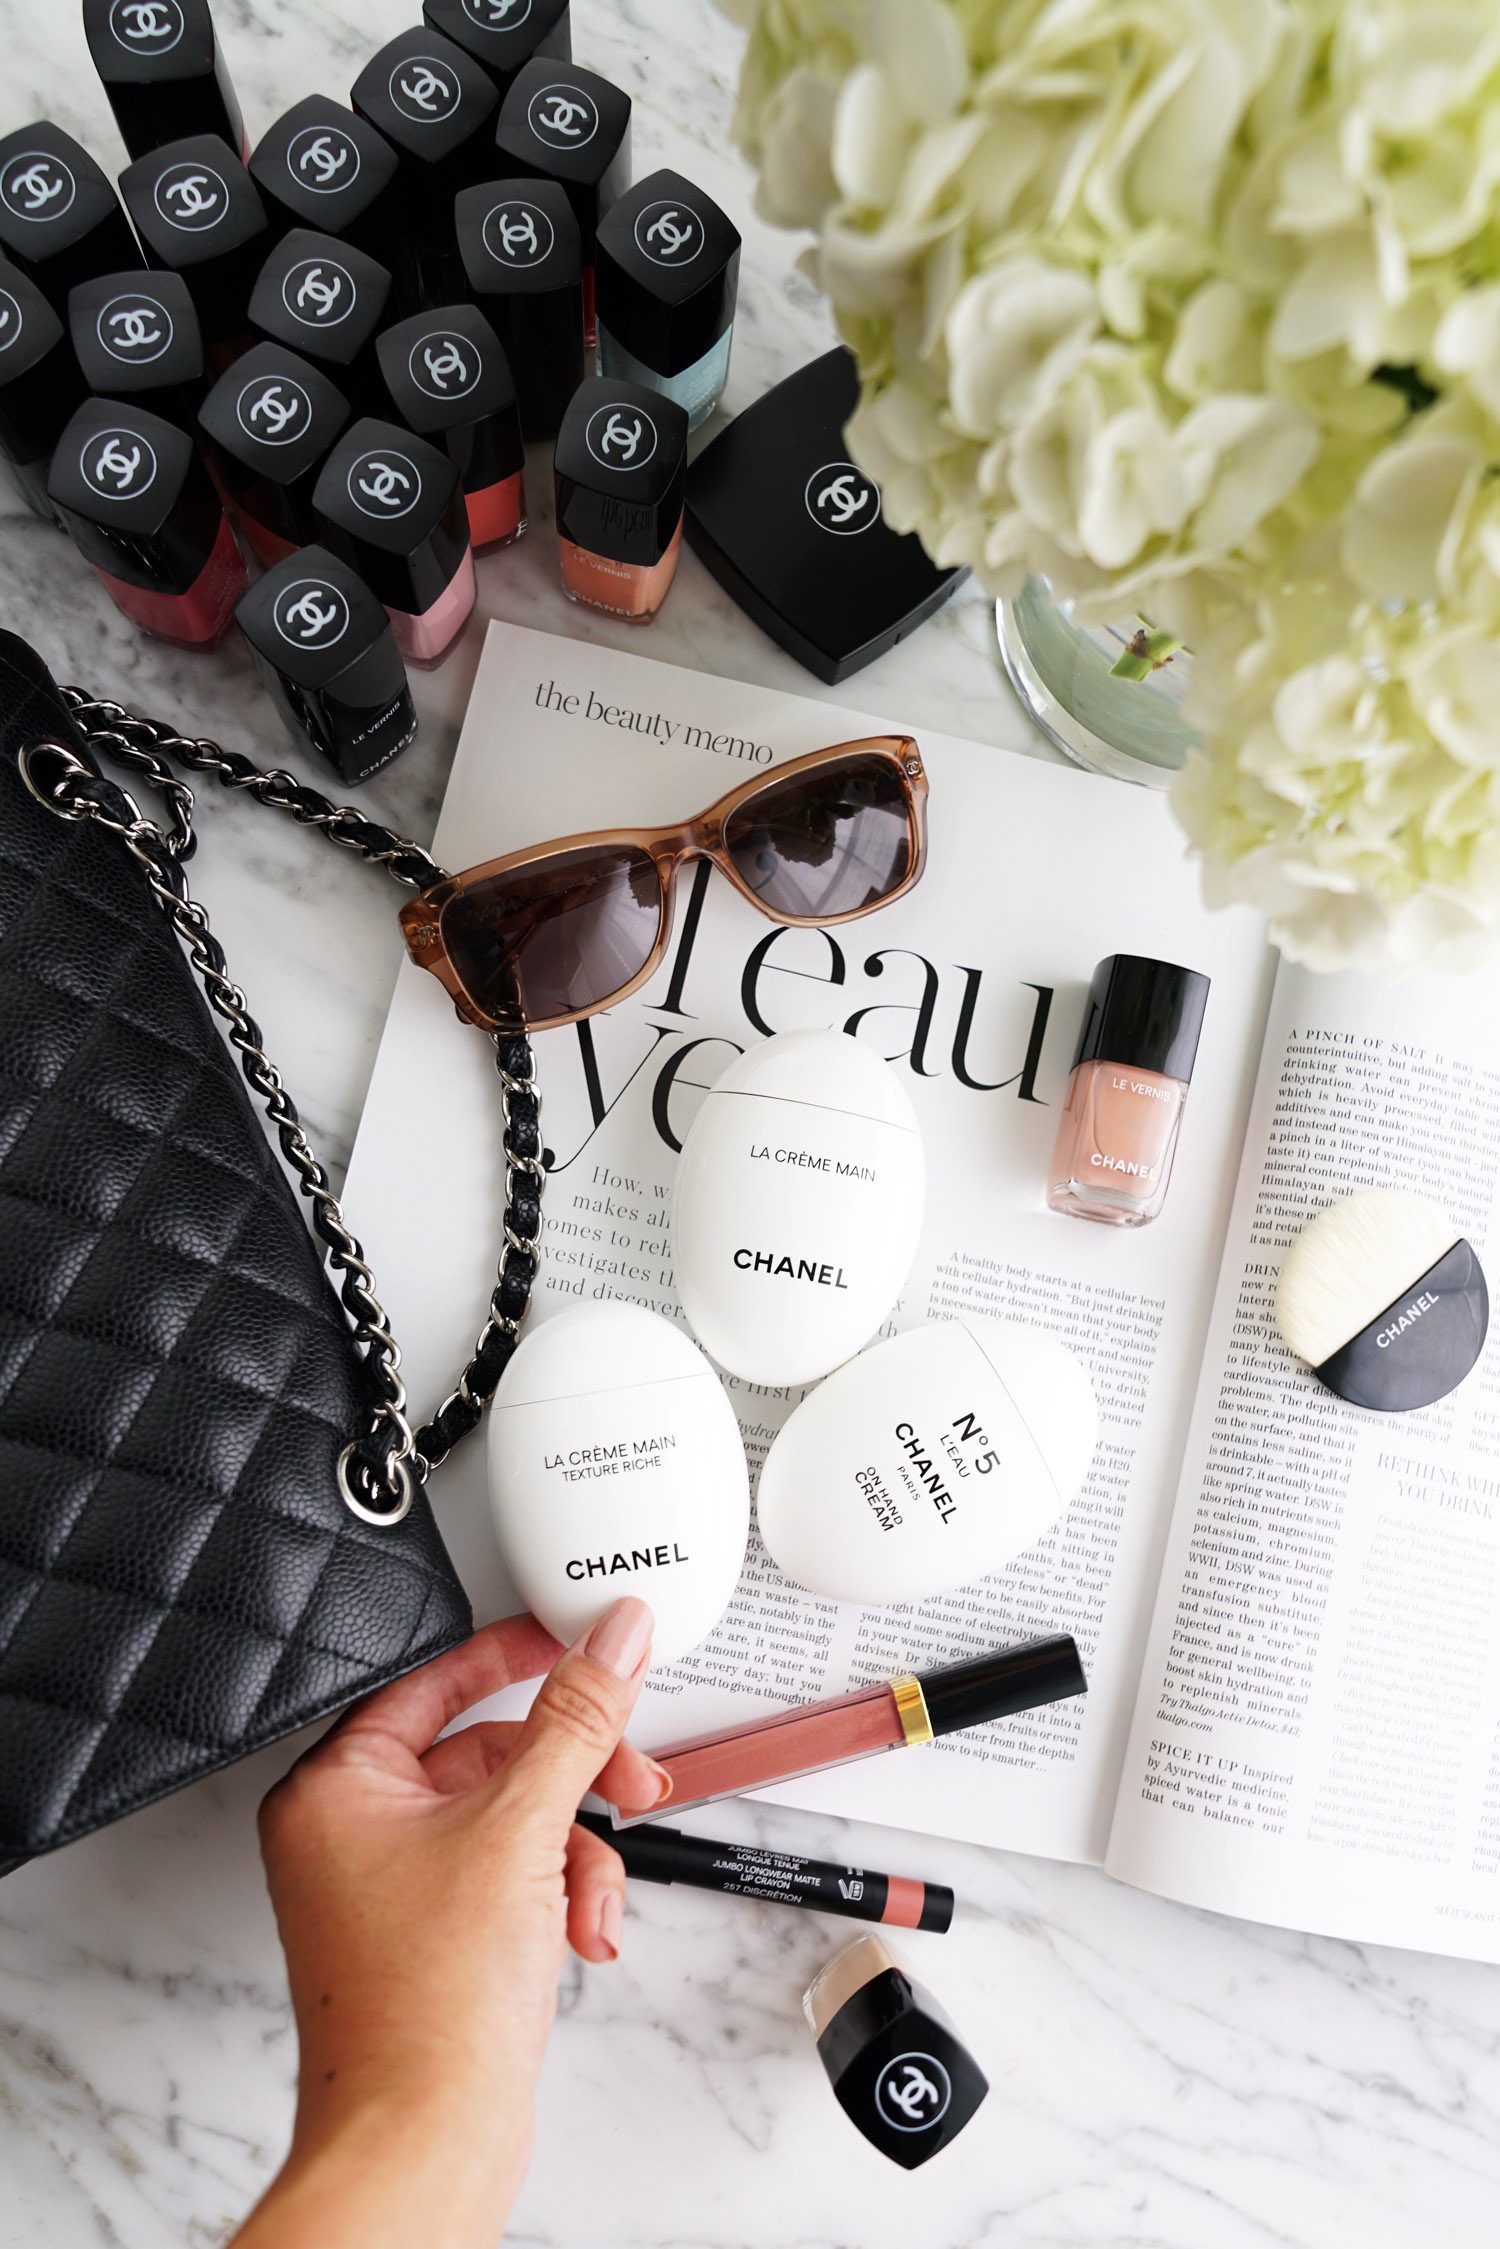 Chanel Hand Cream Review: La Creme Main, Texture Riche and No 5 L'Eau - The  Beauty Look Book